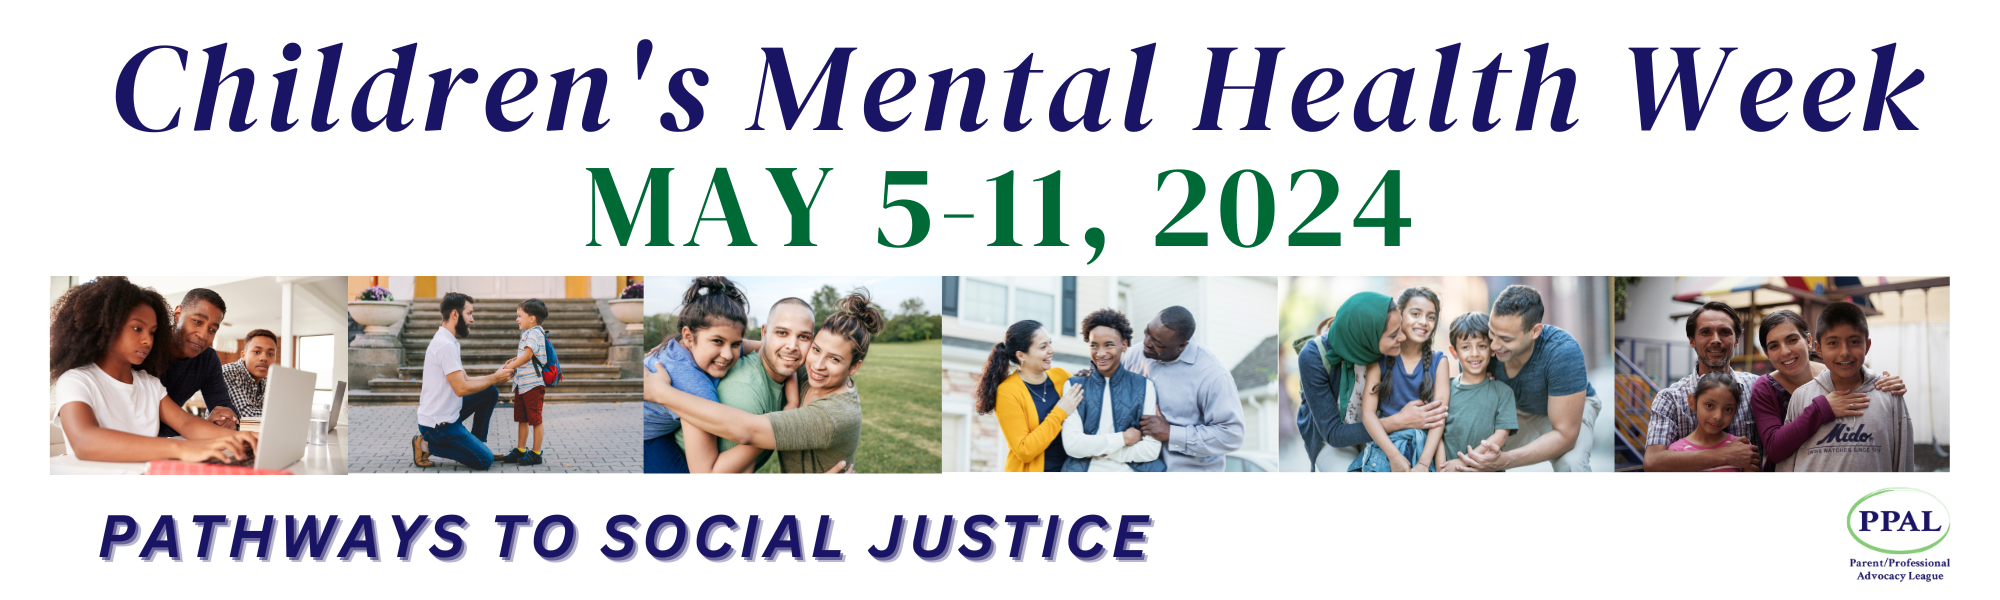 Children's Mental Health Week, May 5-11 2024